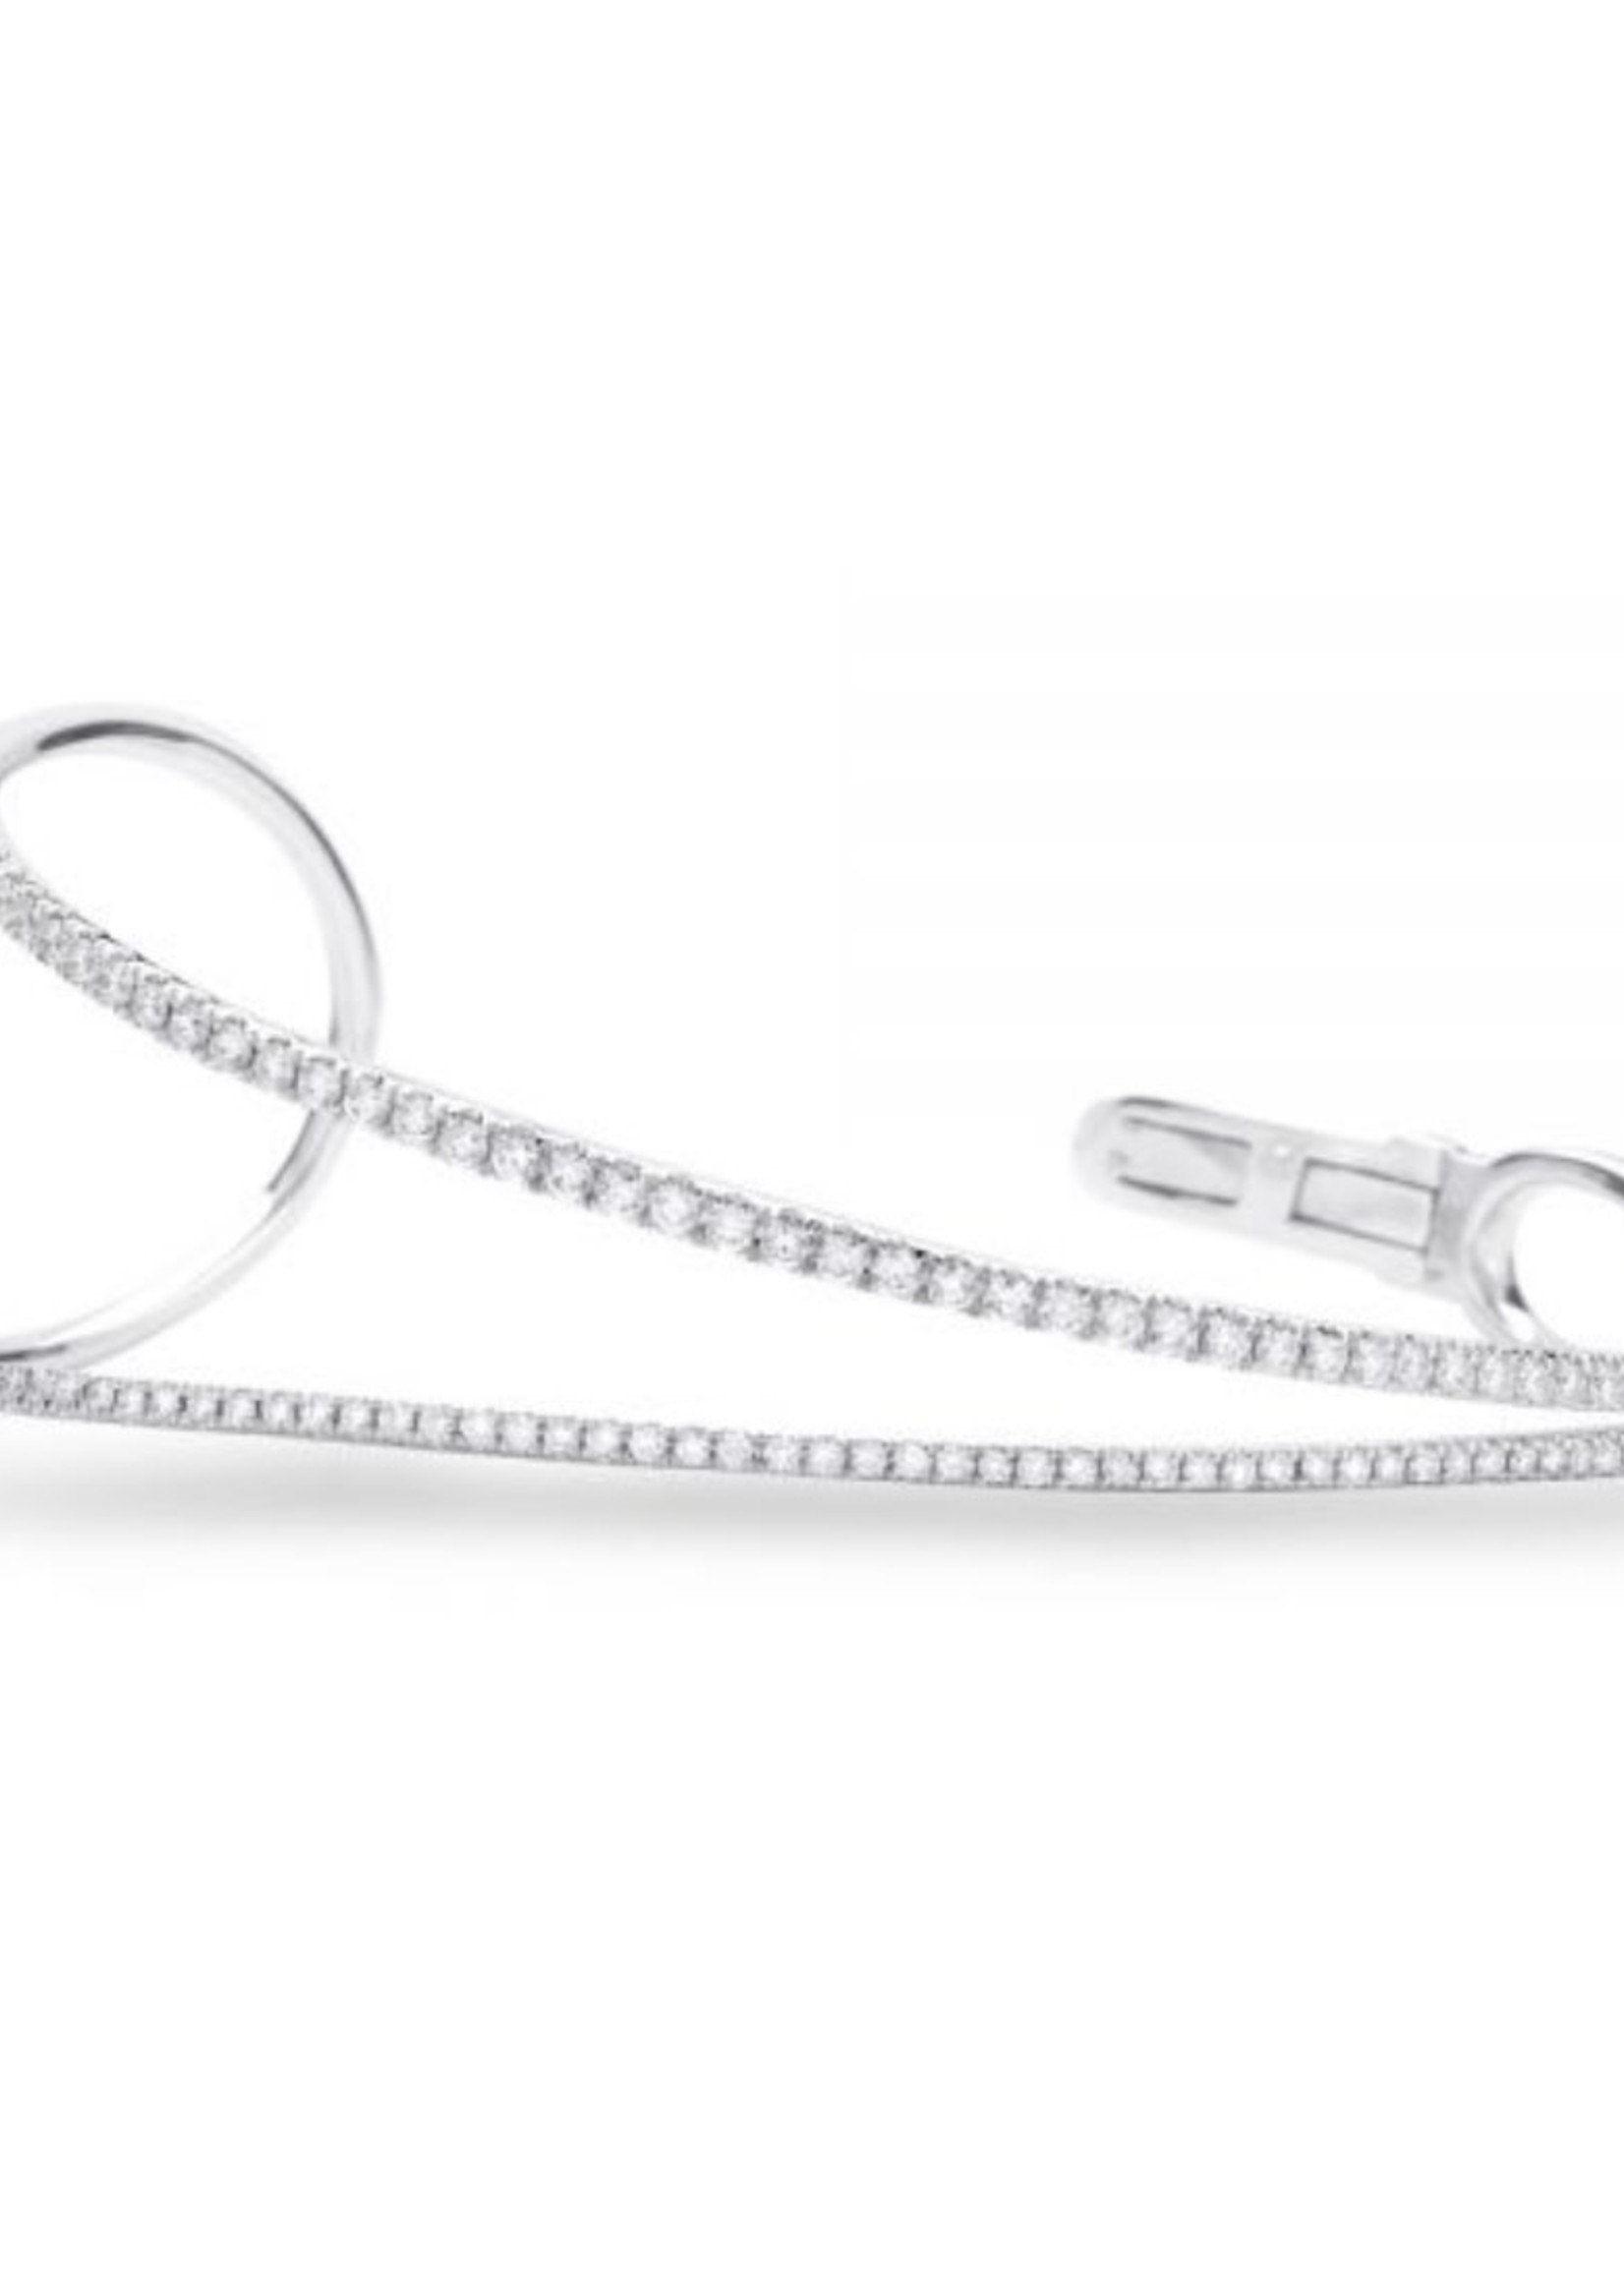 Shula NY 14kW 1.5ctw Elegant Diamond Cuff Bracelet